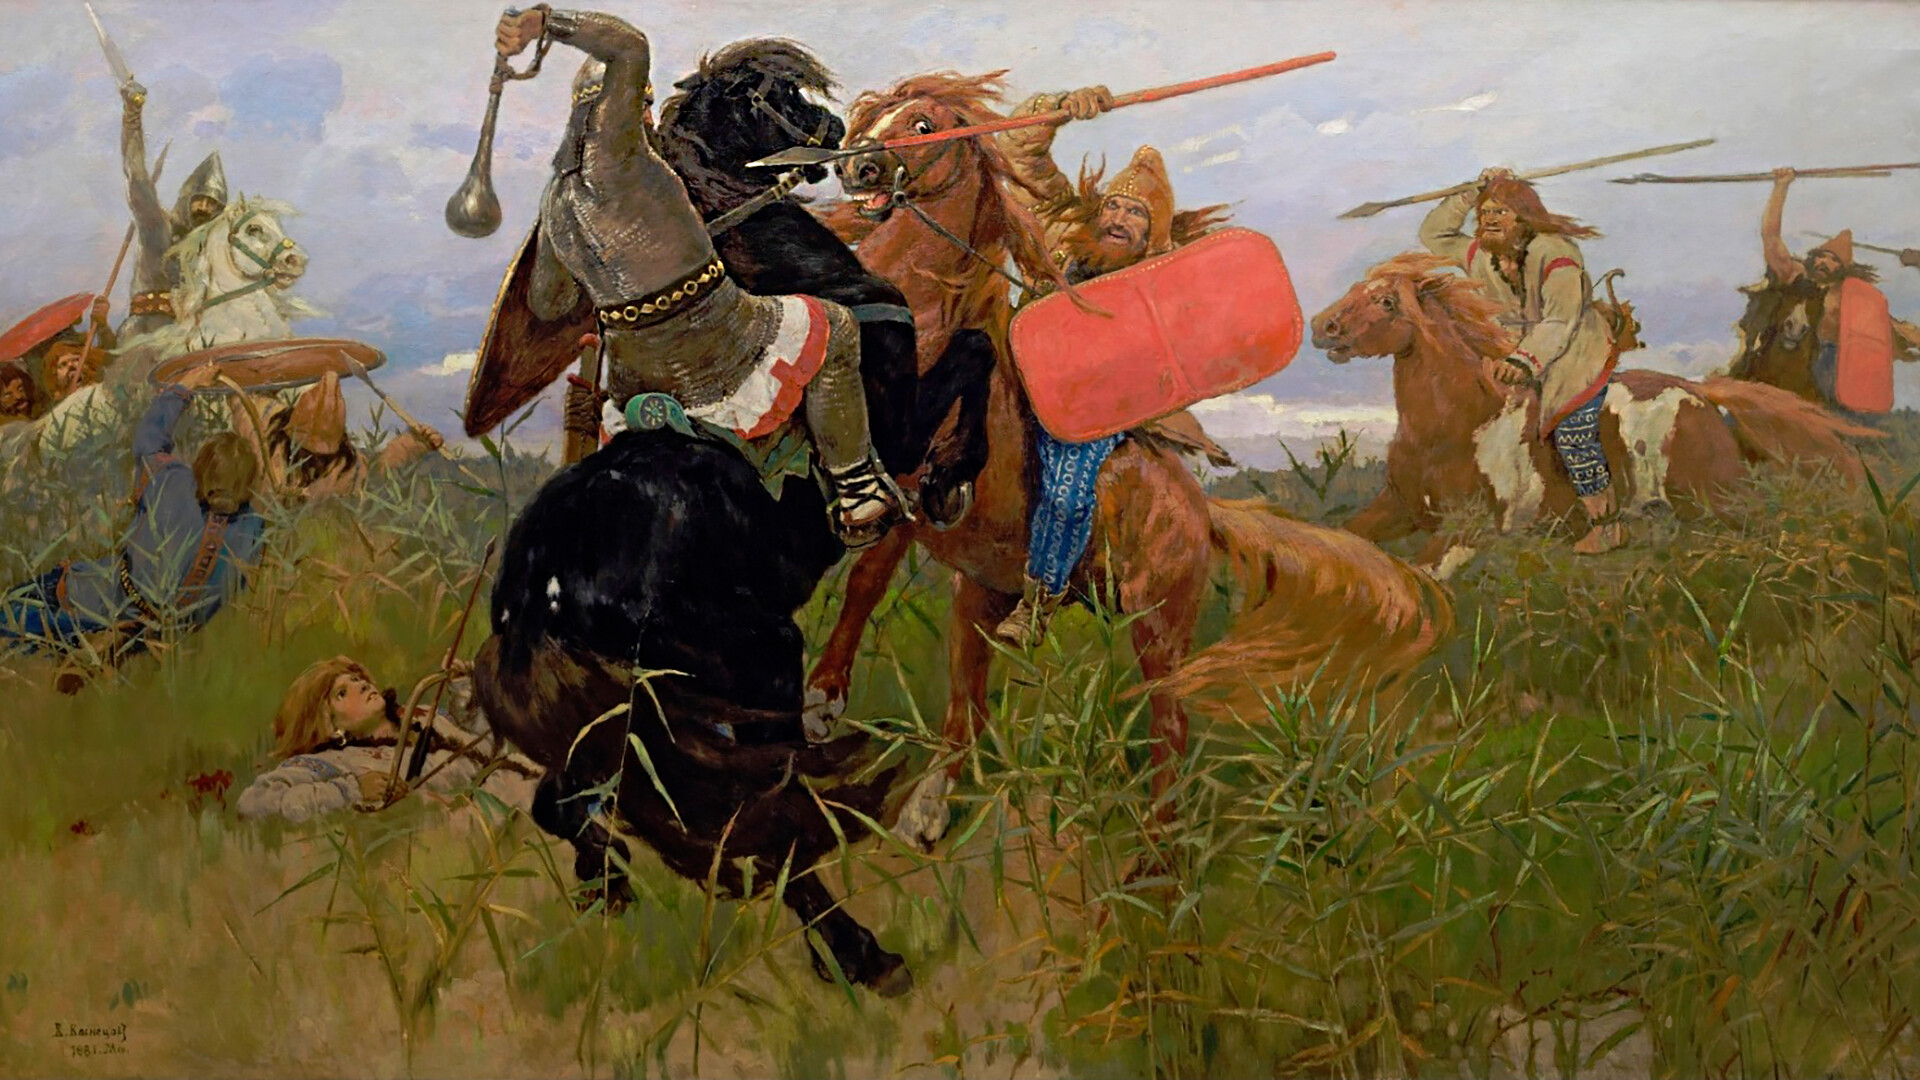 Battle of the Scythians with the Slavs.